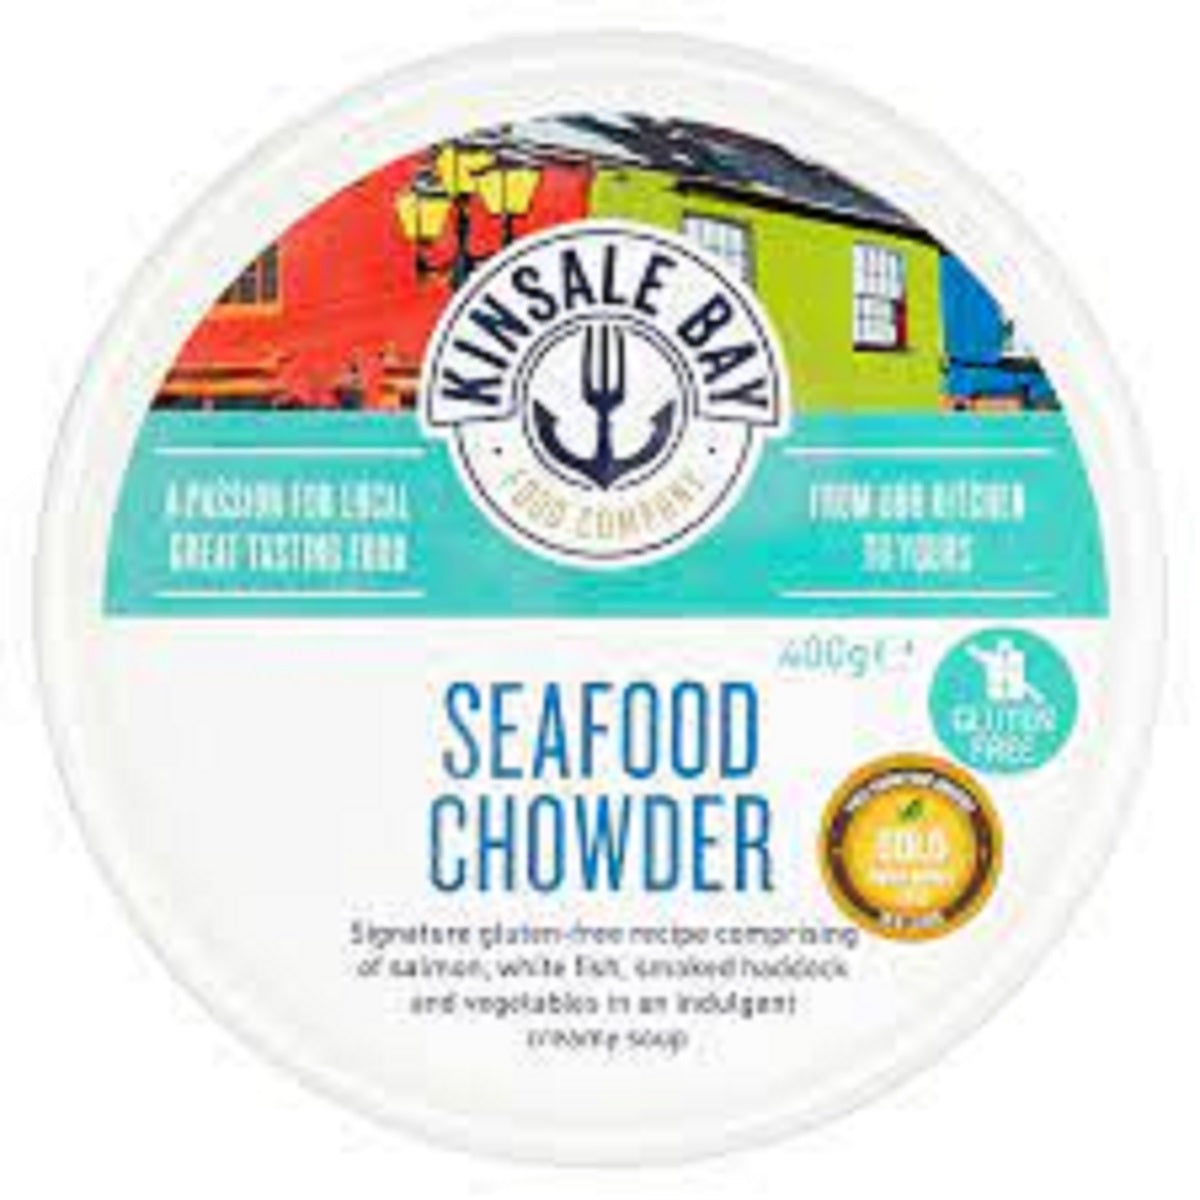 Kinsale Bay Seafood Chowder 400g